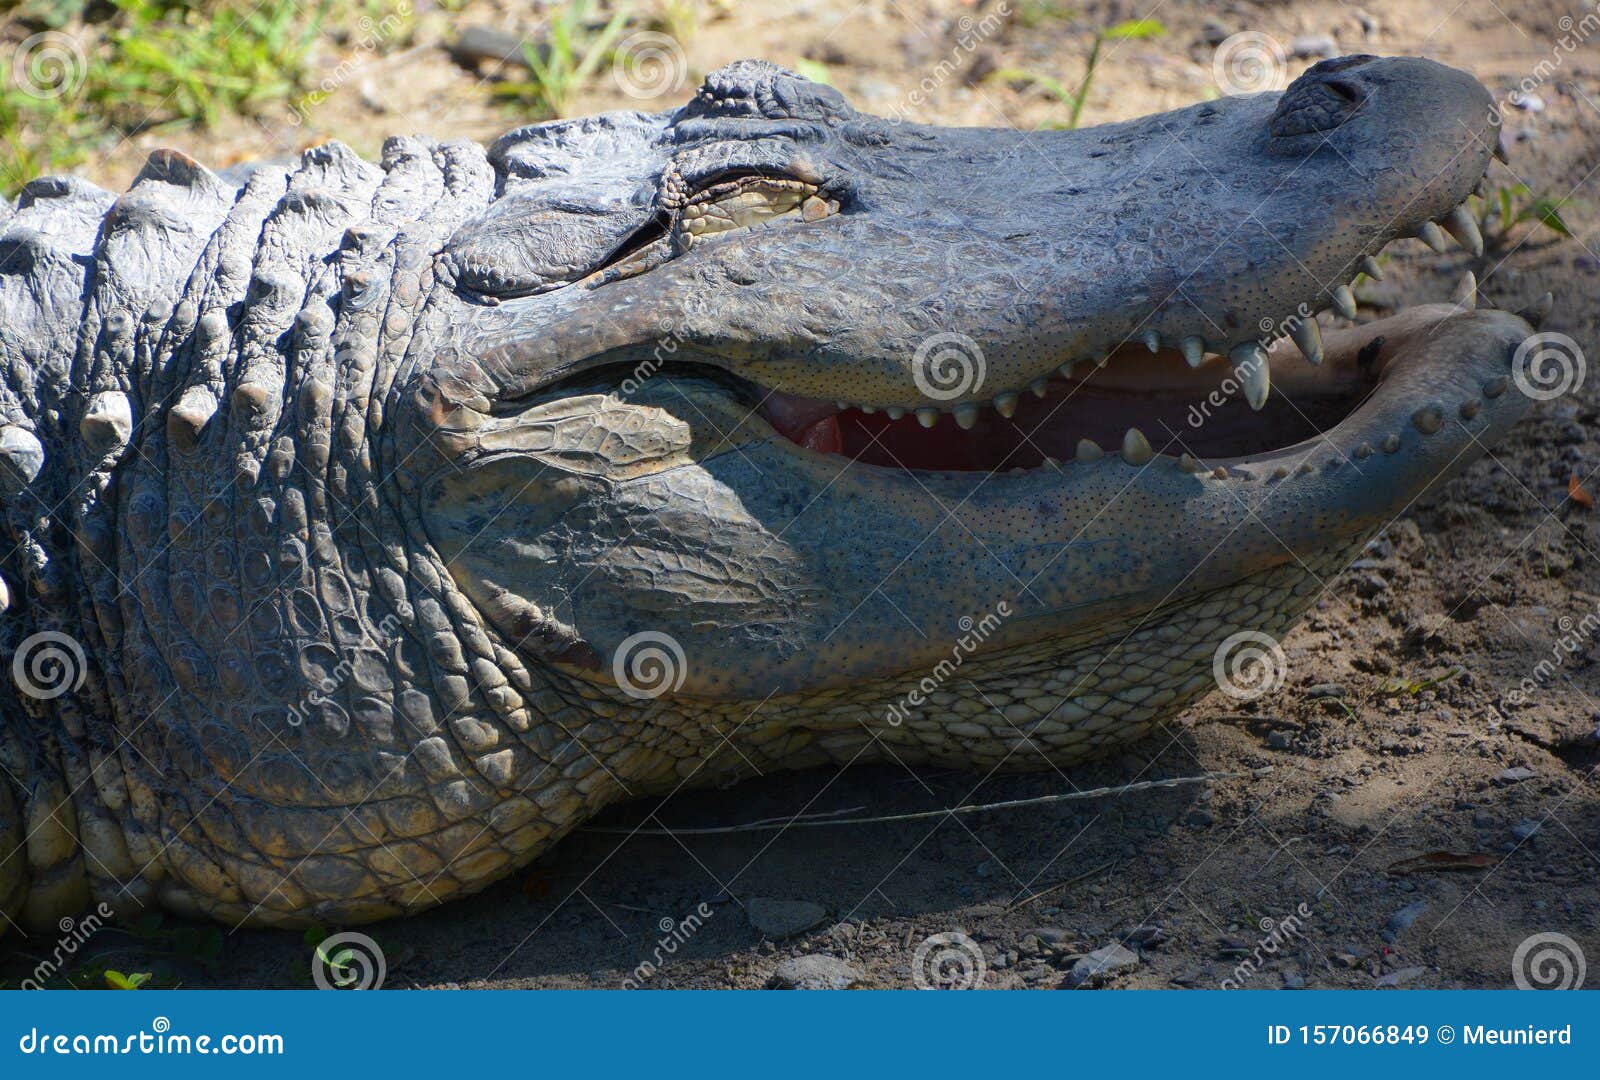 an alligator is a crocodilian in the genus alligator of the family alligatoridae.